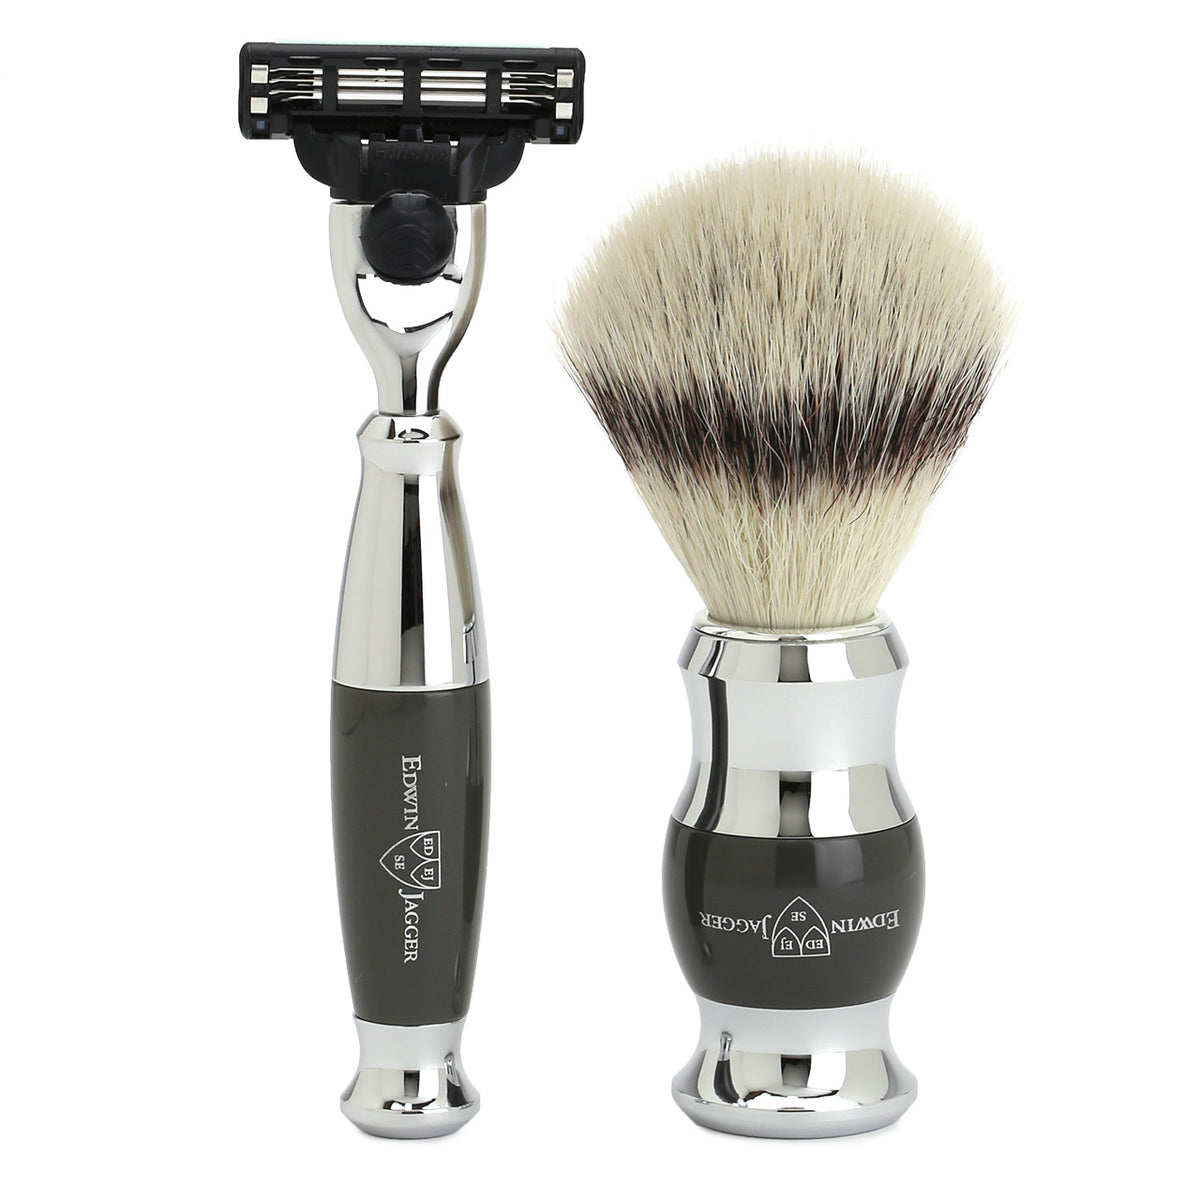 Mach3 Razor and Cruelty-Free Shaving Brush in contemporary Grey